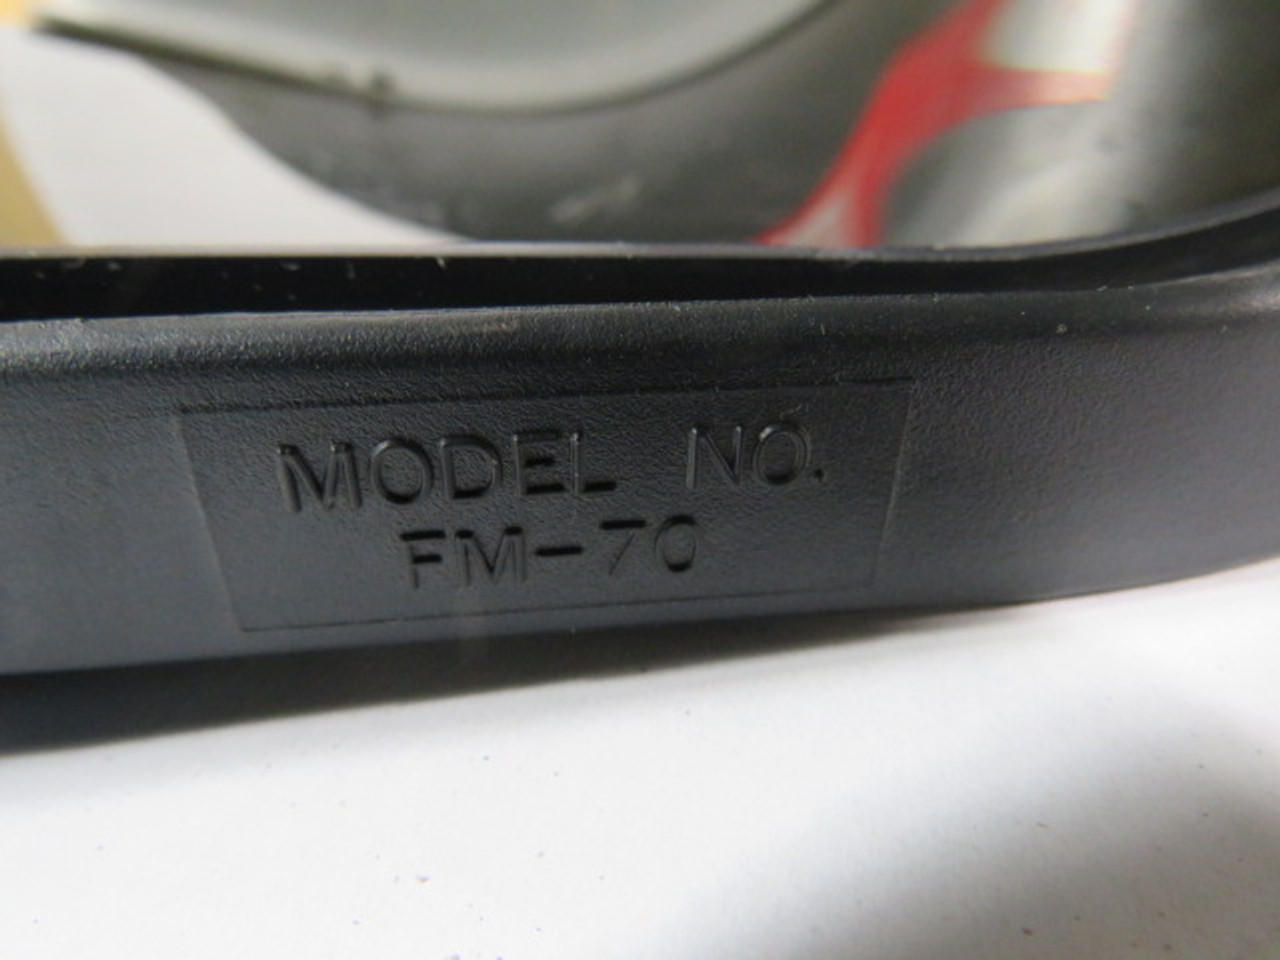 Fibre-Metal FM70-4178IRUVS Welding Face Shield w/ Bracket 8"x16.5"x0.6" USED